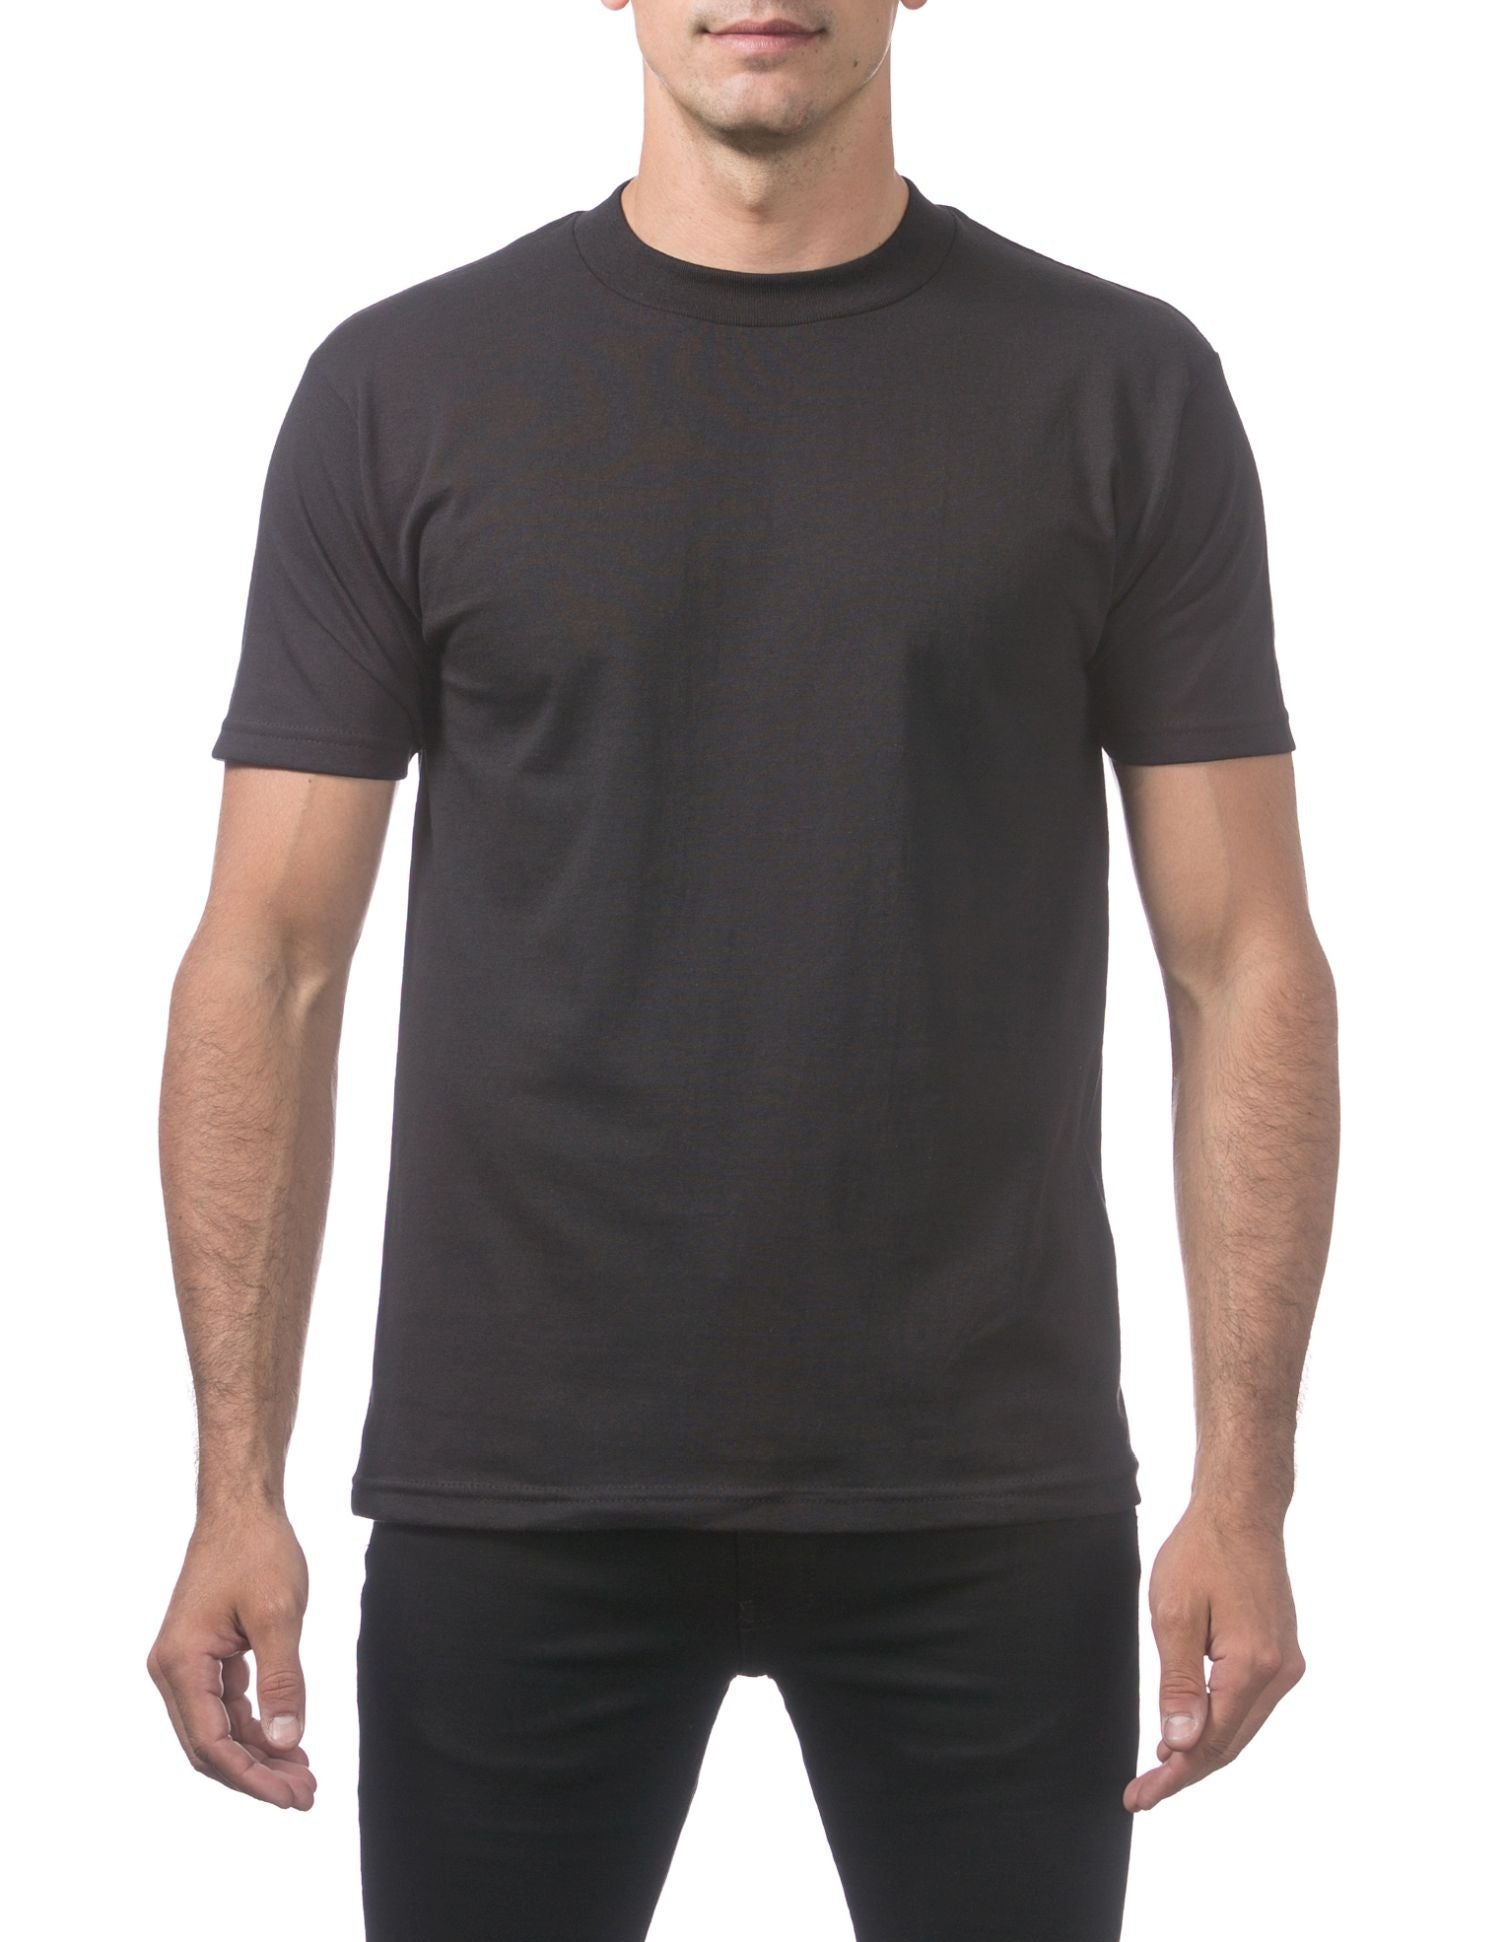 Pro Club Men's Comfort Cotton Short Sleeve T-Shirt - Black - Large - Pro-Distributing